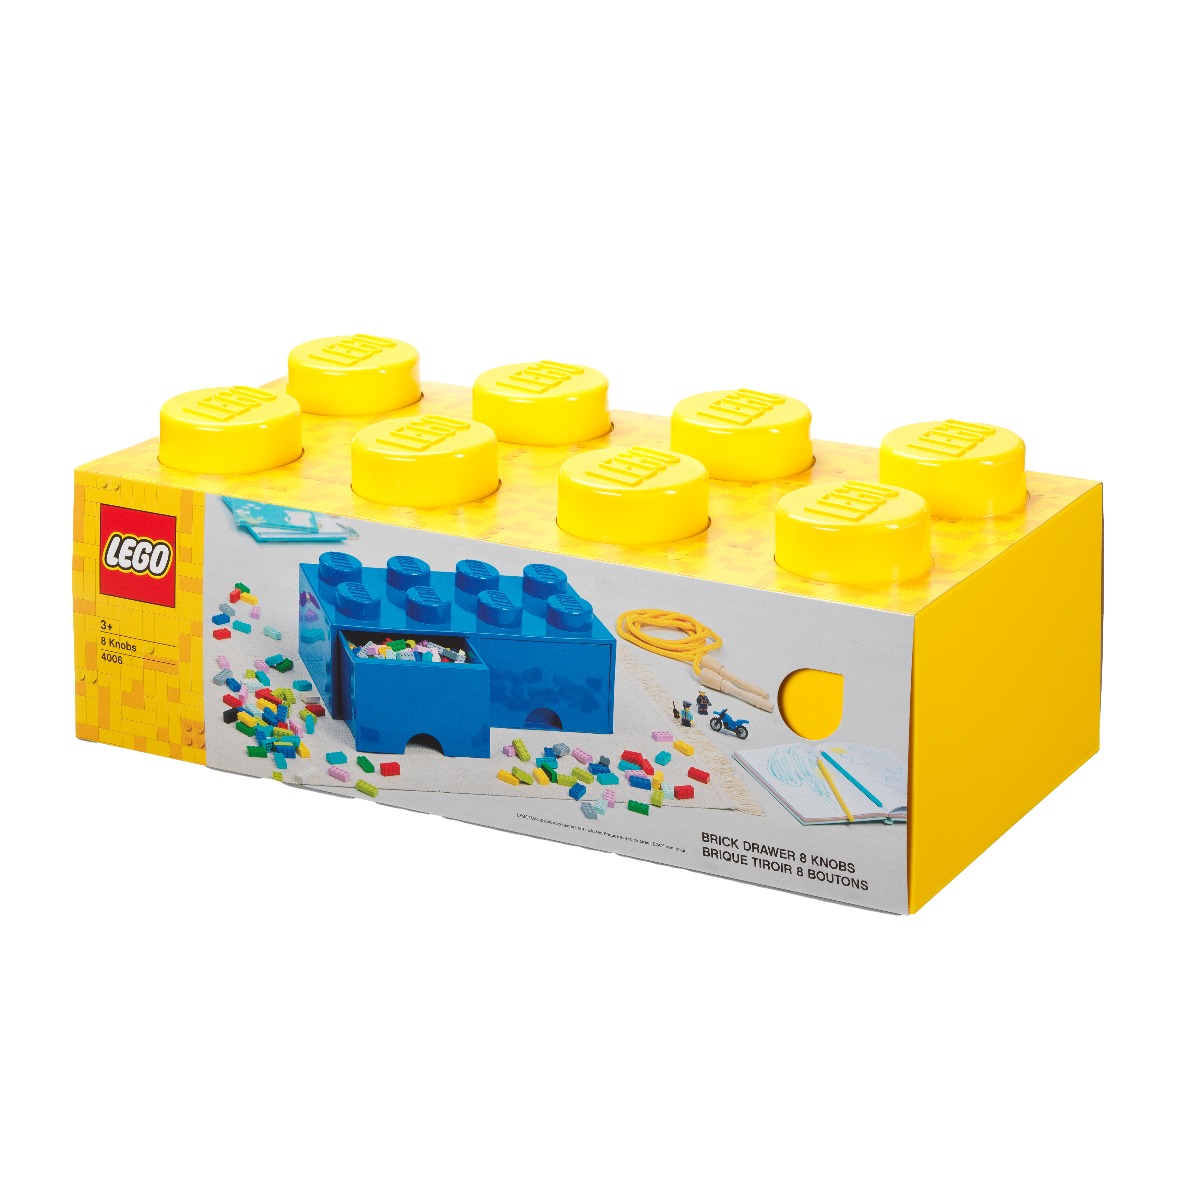 Cutie depozitare Lego, cu 2 sertare si 8 pini, Galben